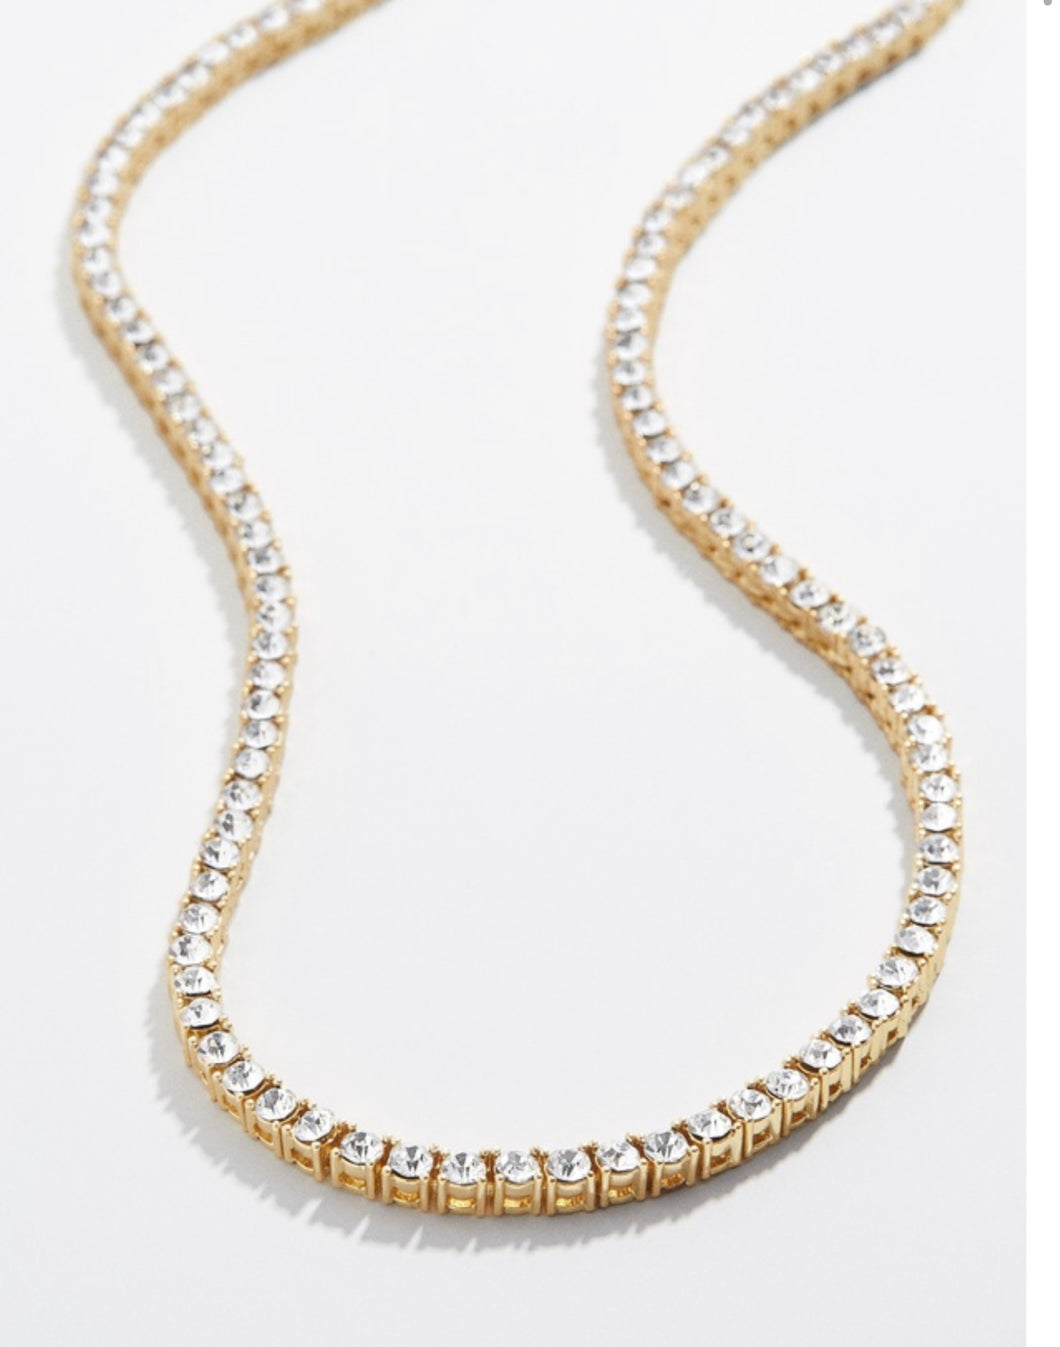 Rhinestone Choker Necklaces,Kucheed 4 Row Silver Palestine | Ubuy